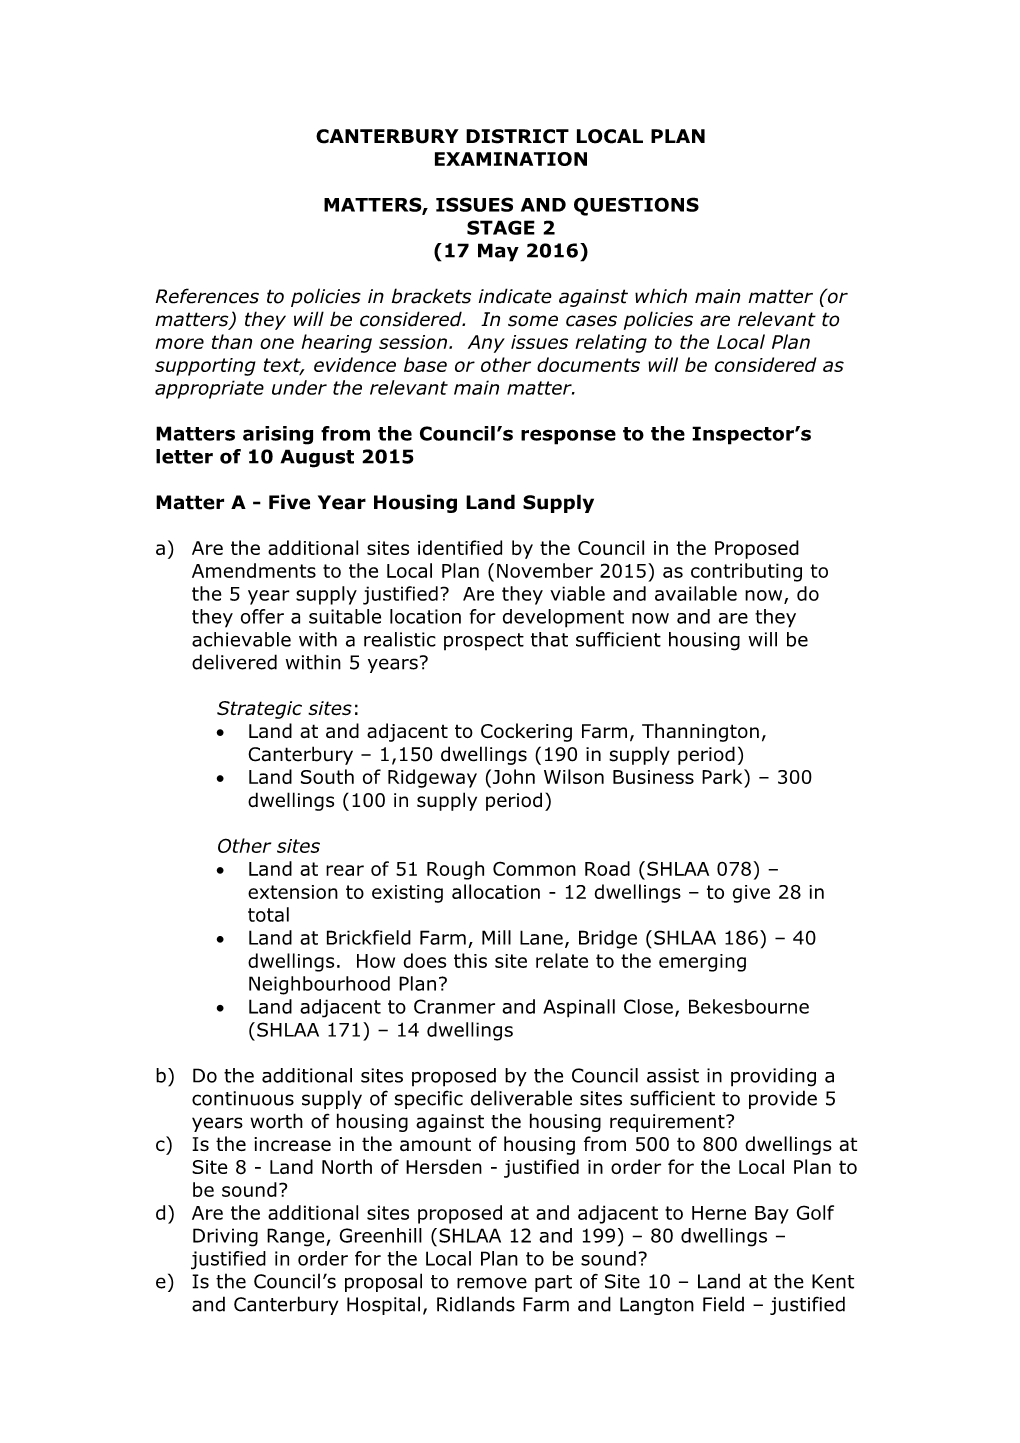 Tonbridge and Malling Mananaging Development and the Environment Development Plan Document